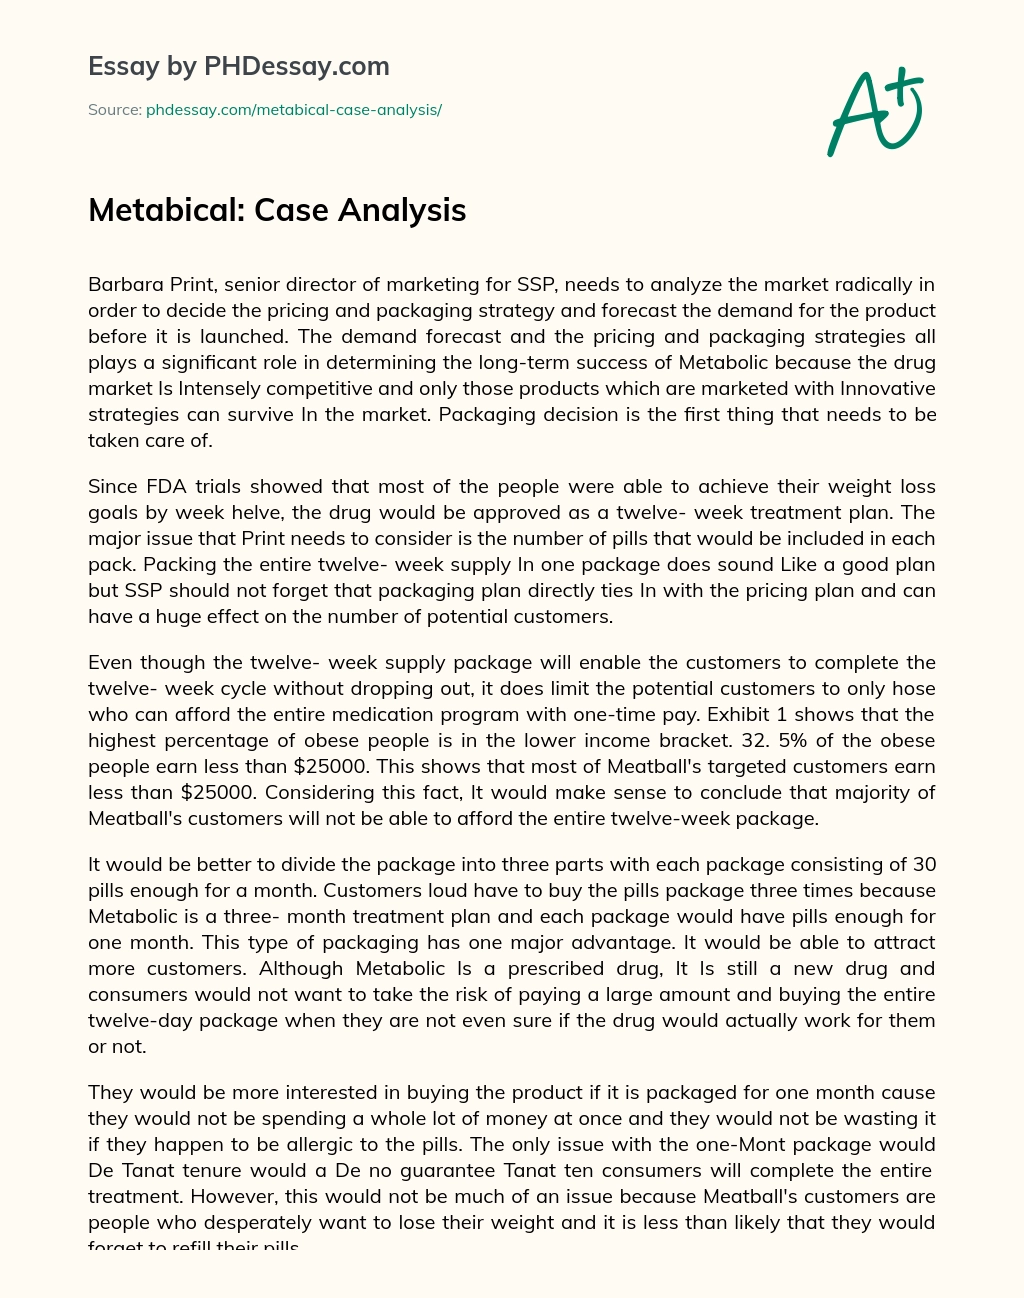 Metabical: Case Analysis essay